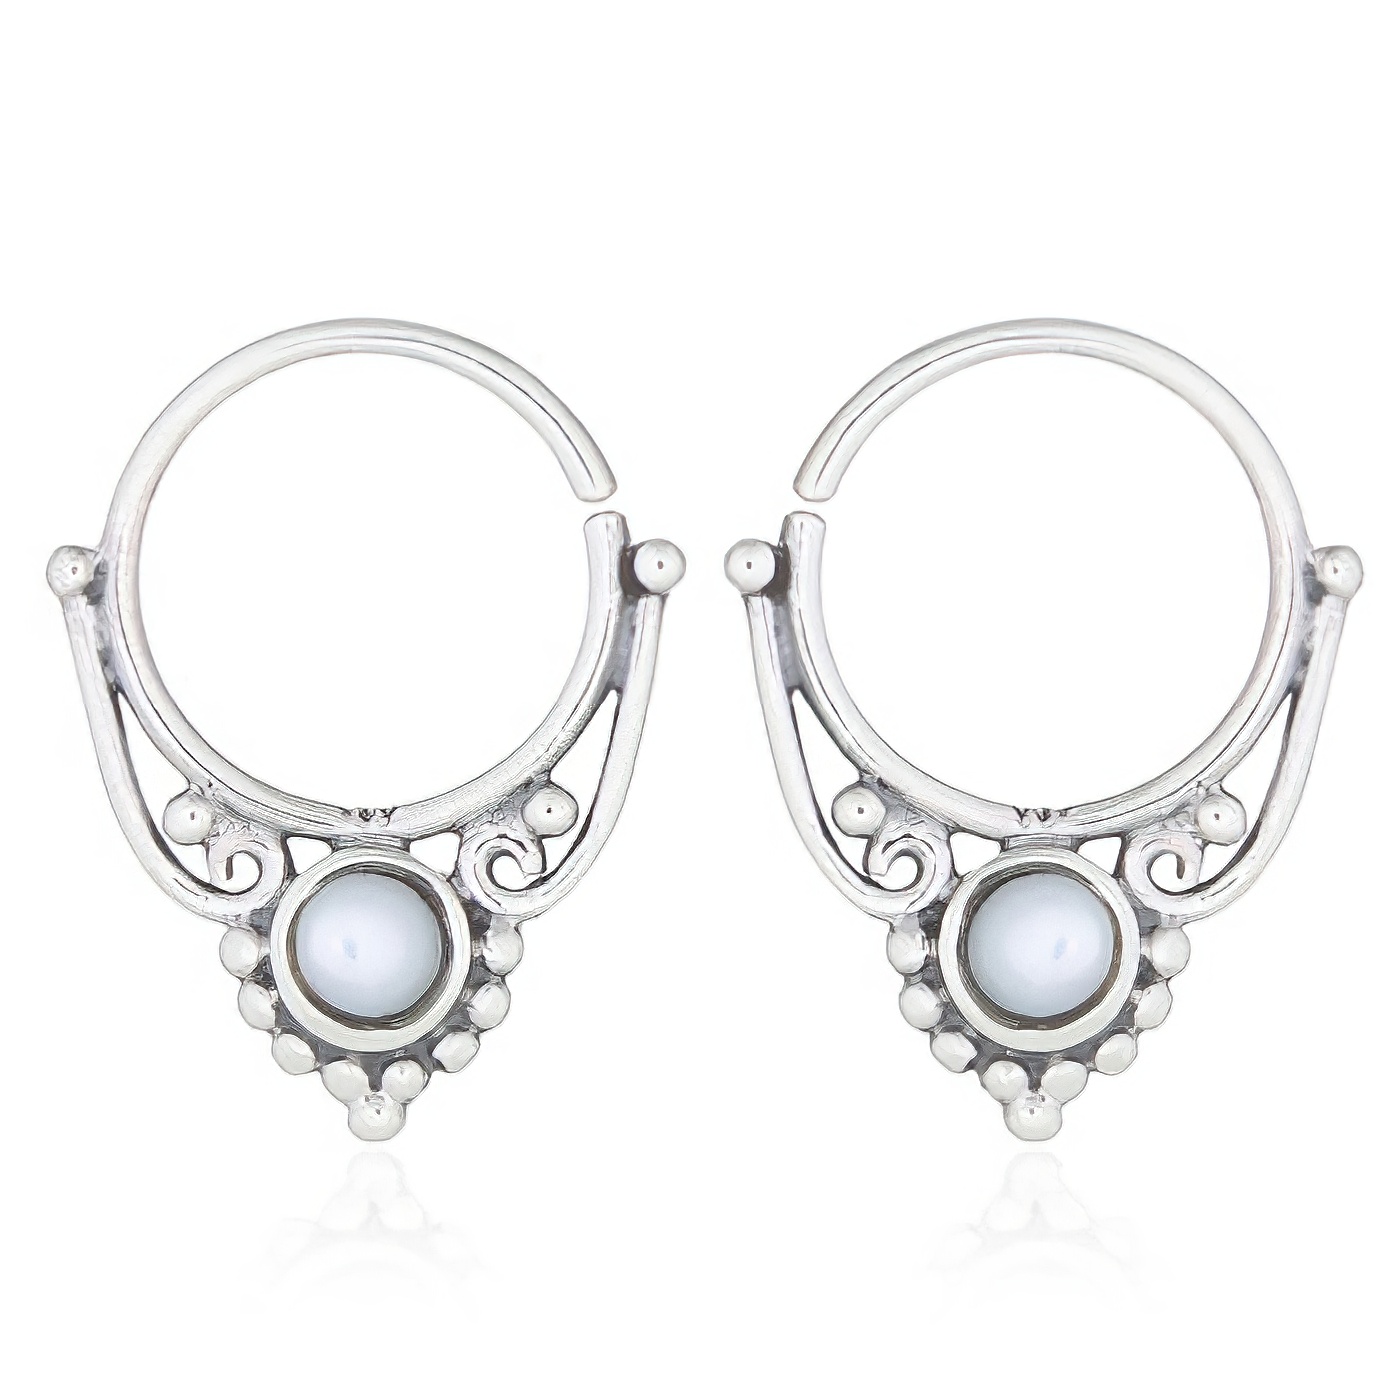 Classic Boho Septum Hoop Mother of Pearl Earrings 925 Silver by BeYindi 